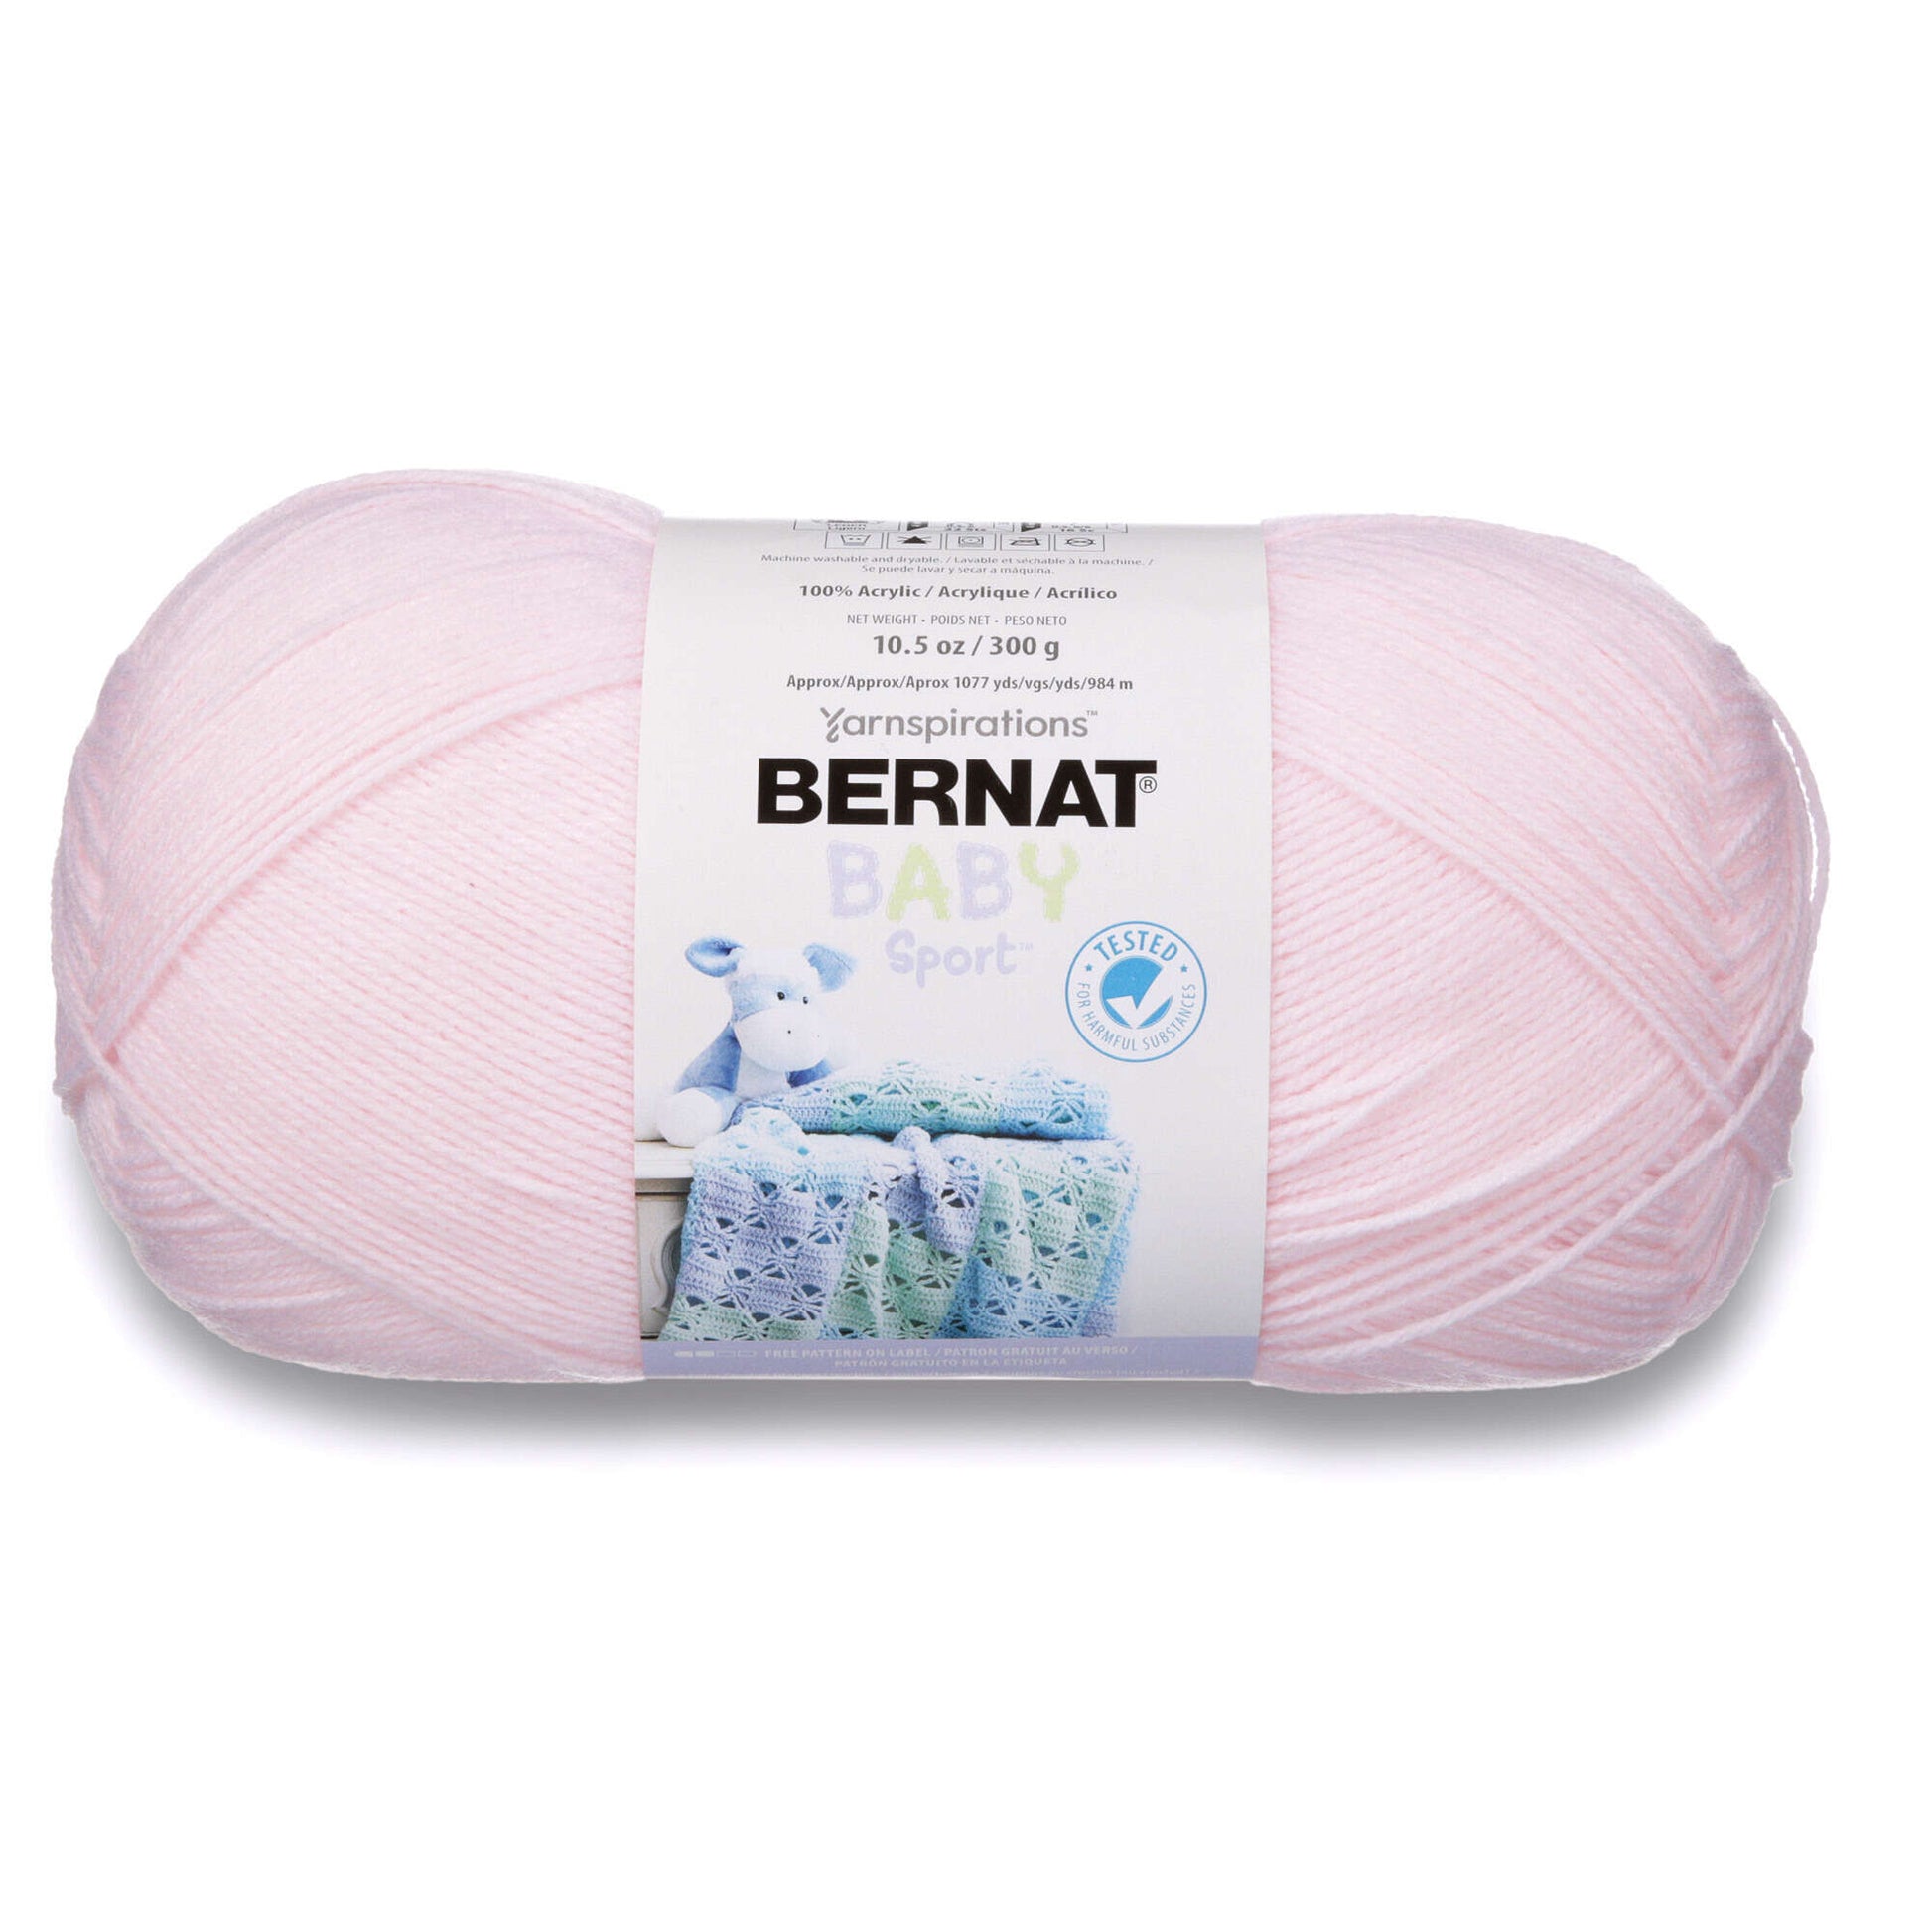 Bernat Baby Sport Yarn (300g/10.5oz) Baby Pink